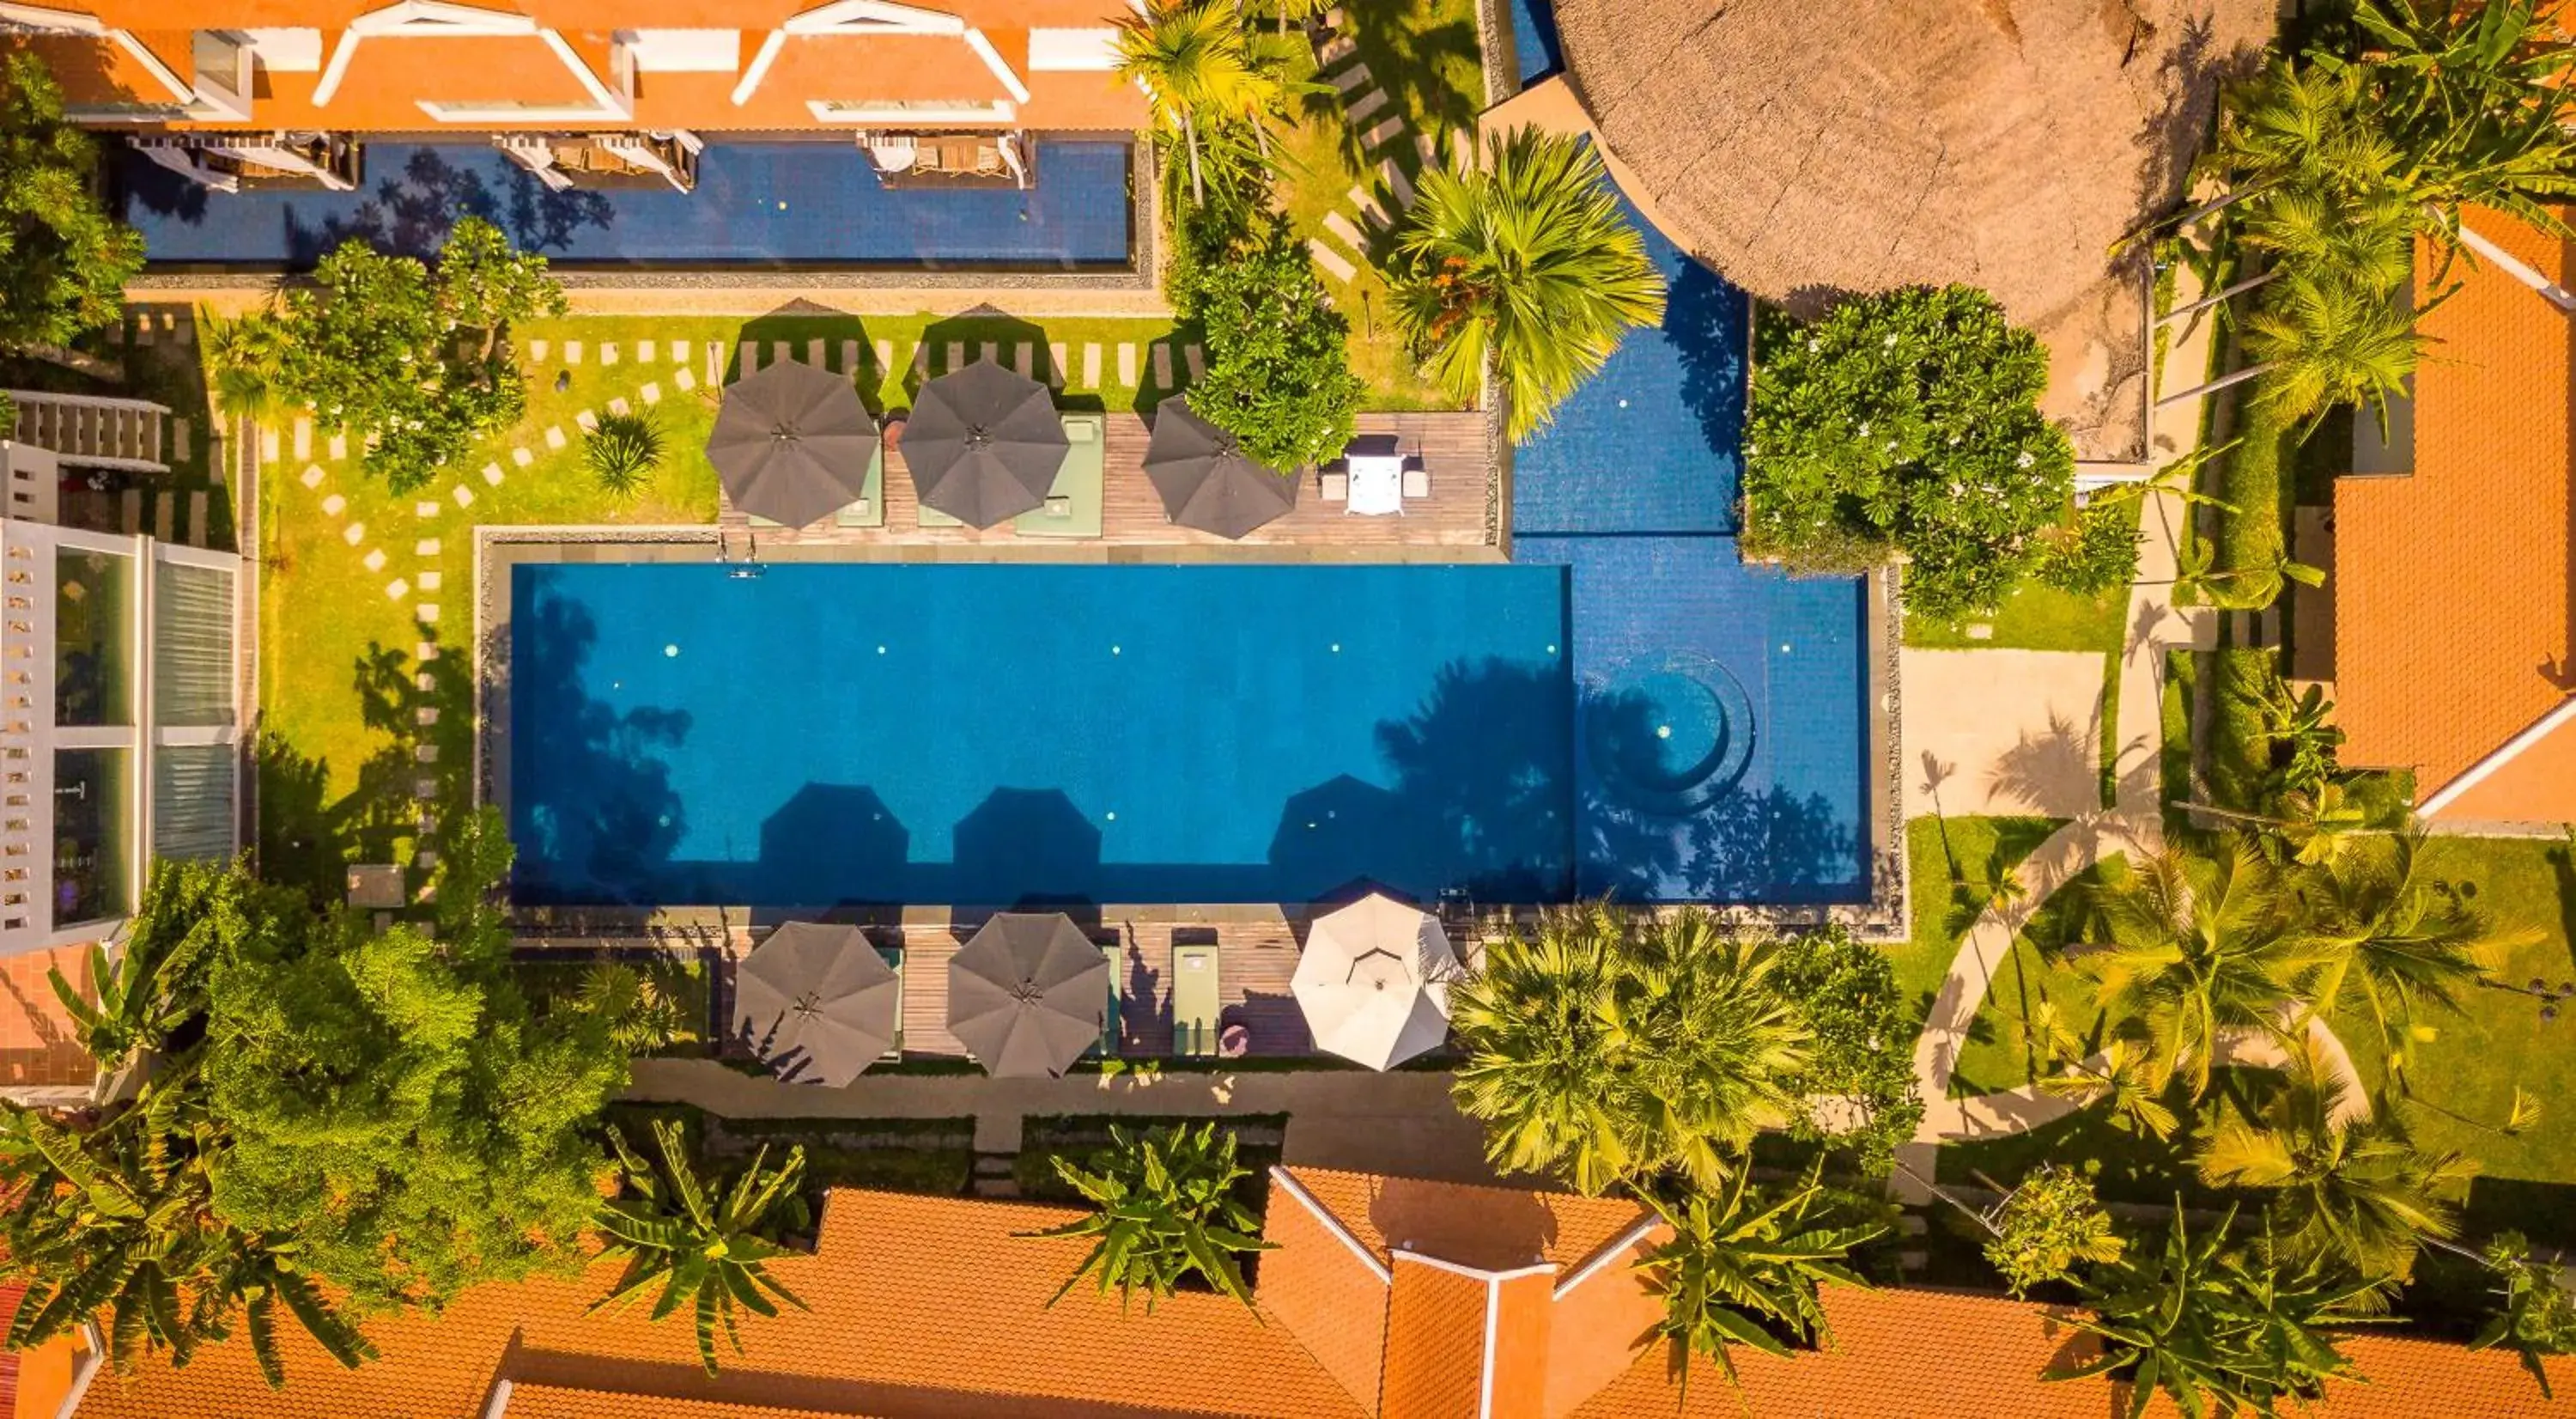 Floor plan, Bird's-eye View in The Embassy Angkor Resort & Spa